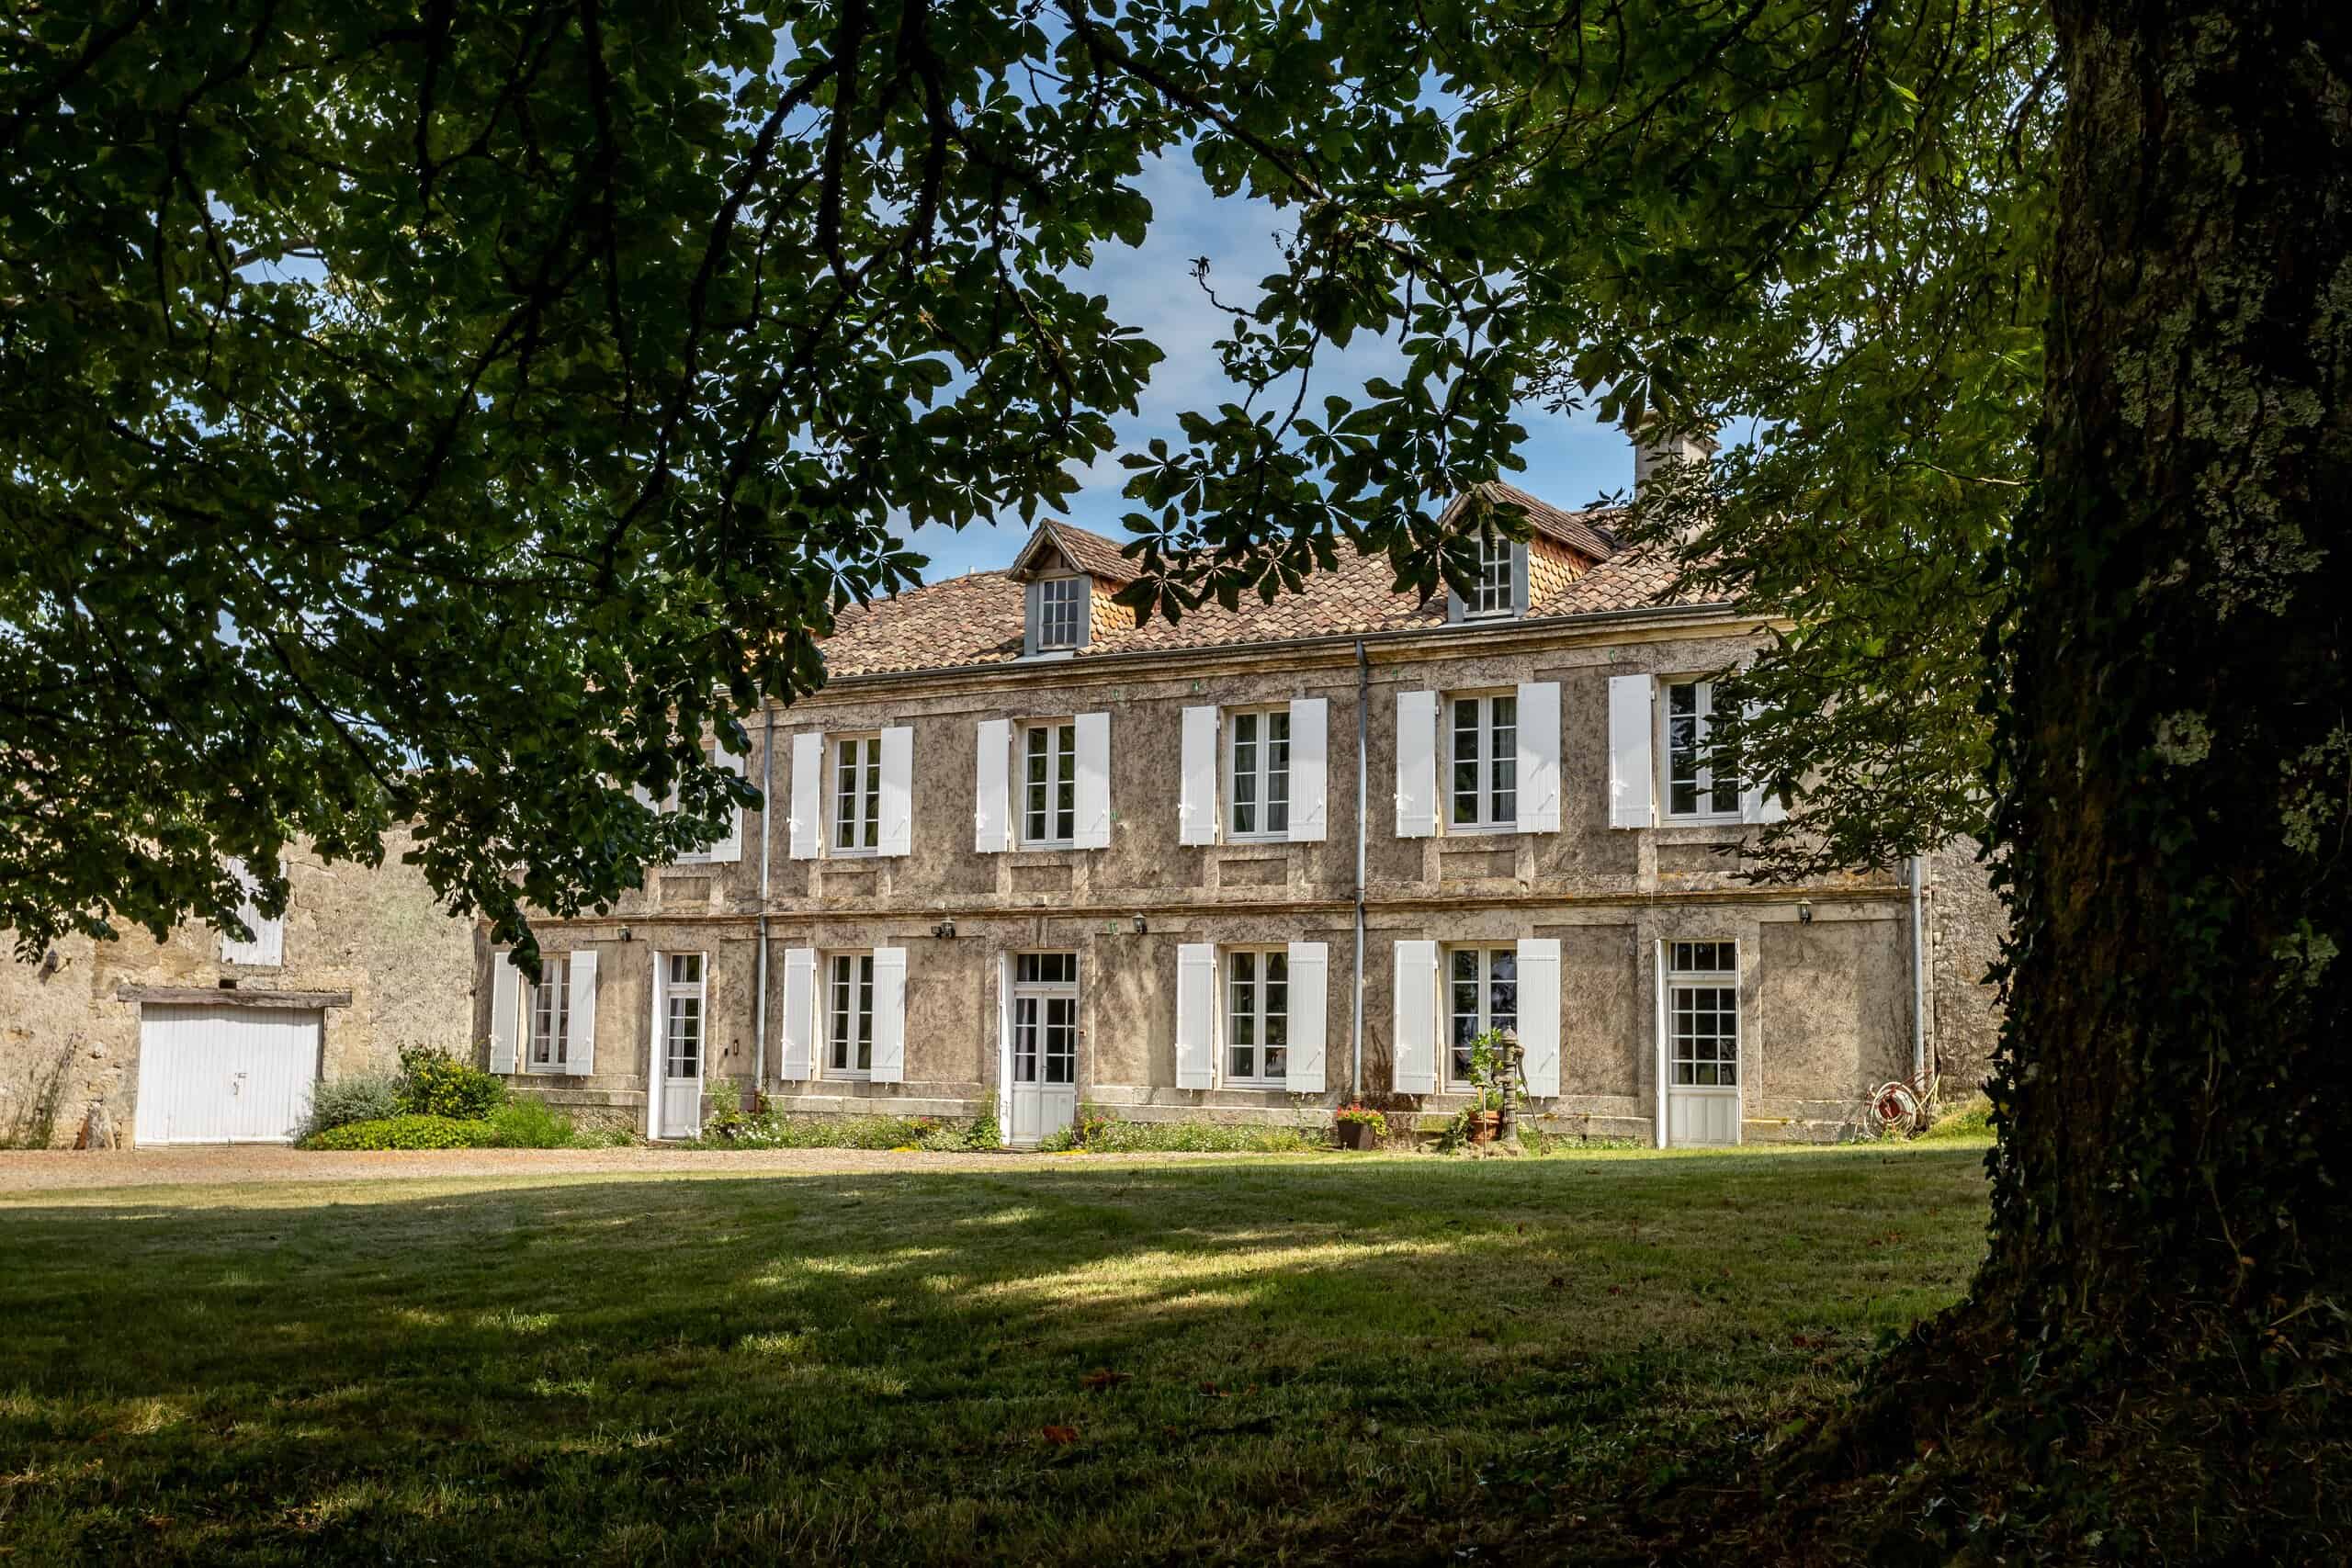 Stone manor house